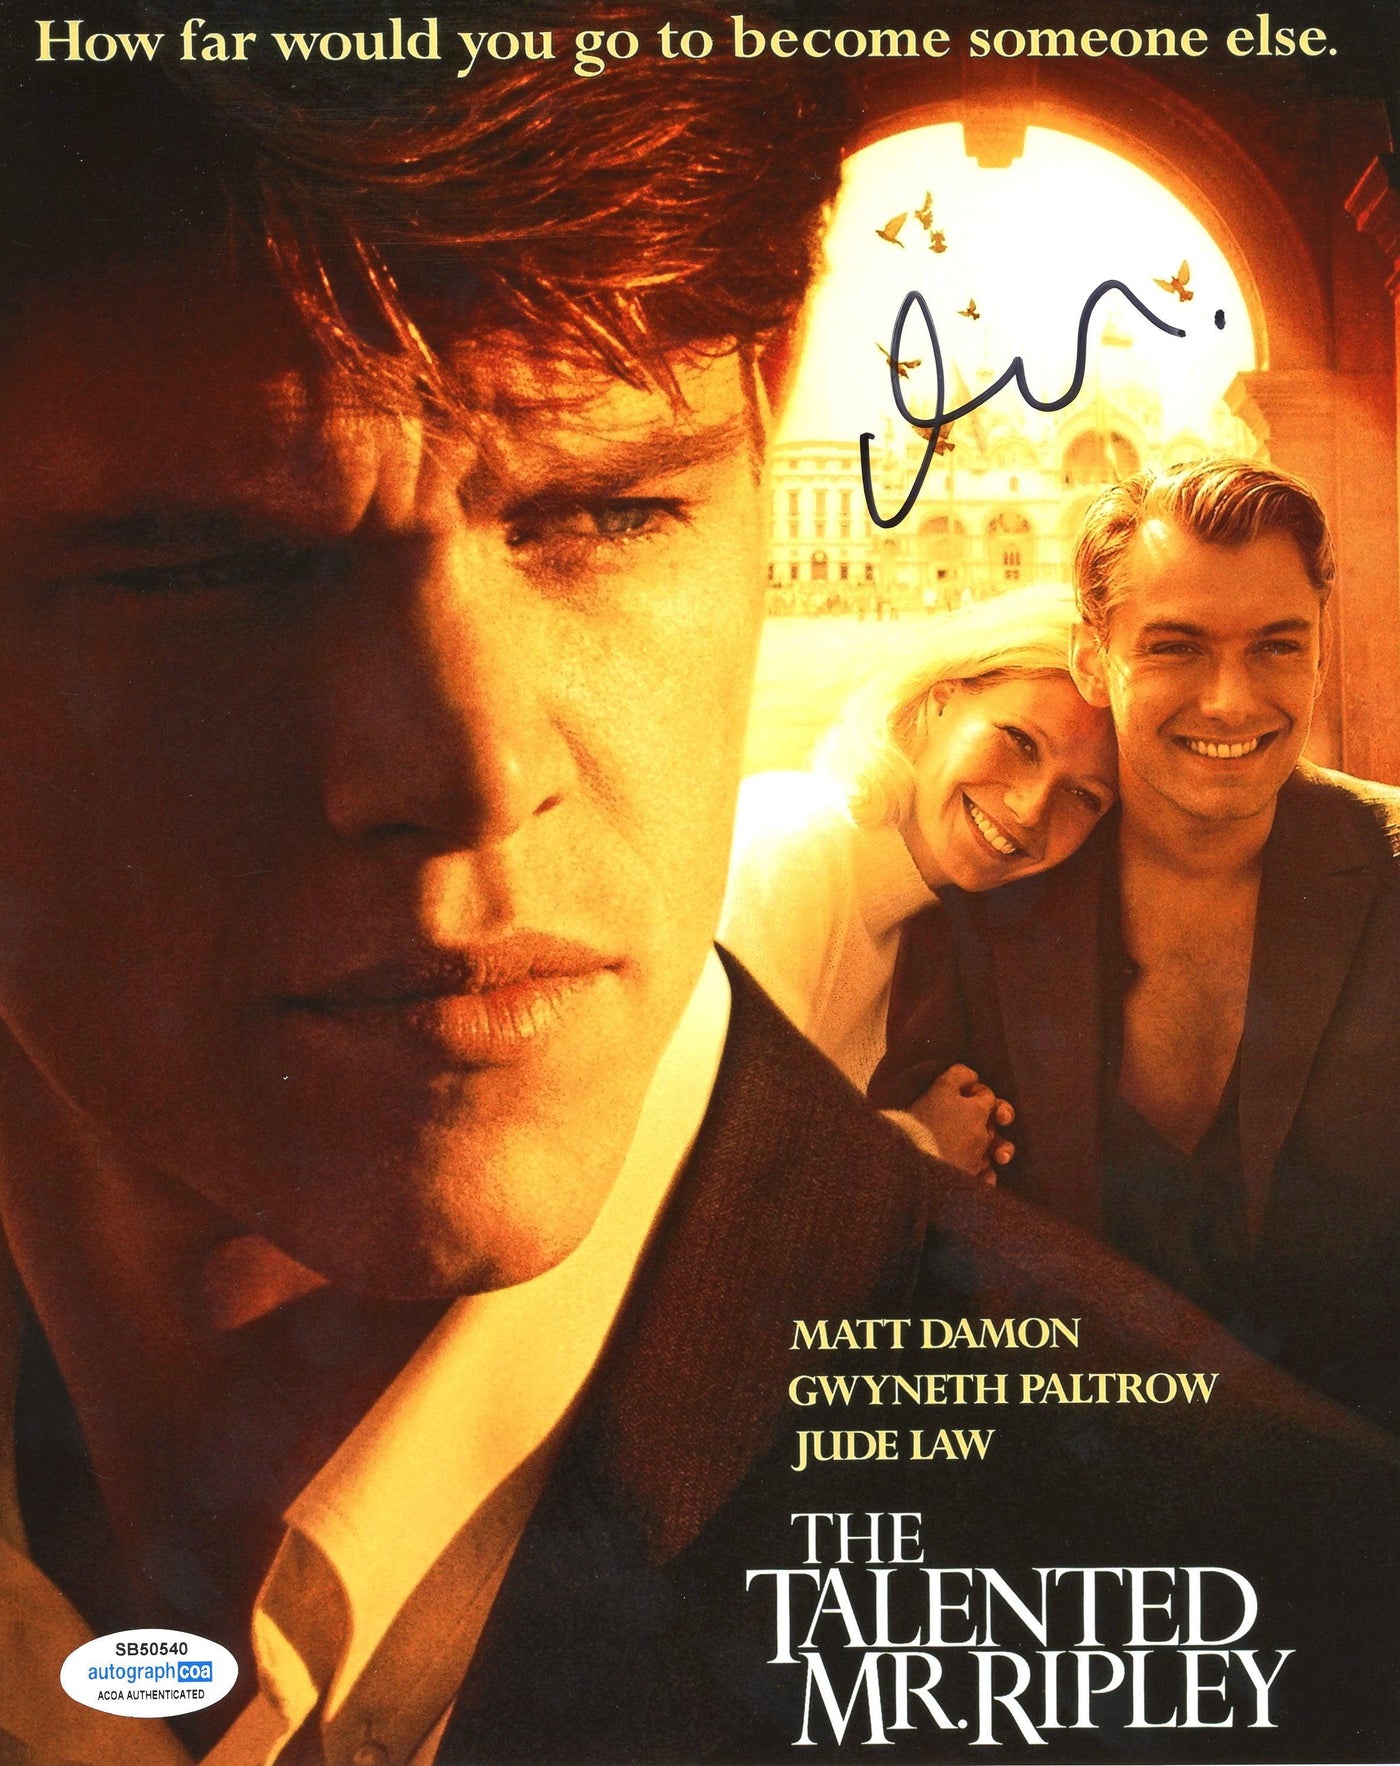 Matt Damon Signed 8x10 Photo The Talented Mr. Ripley Autographed AutographCOA